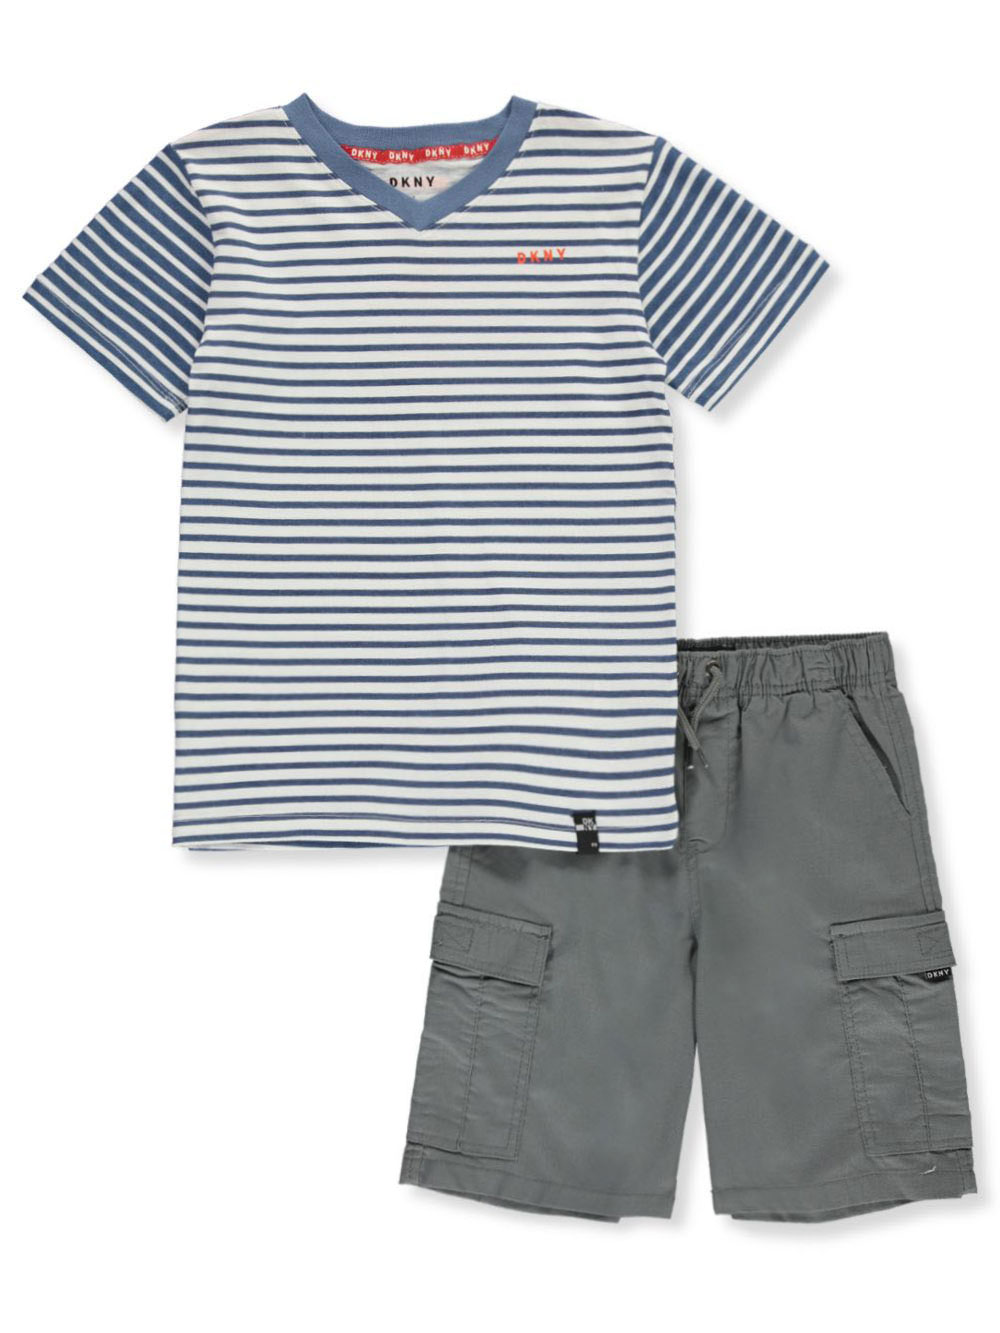 Cargo Stripes 2-Piece Shorts Set Outfit